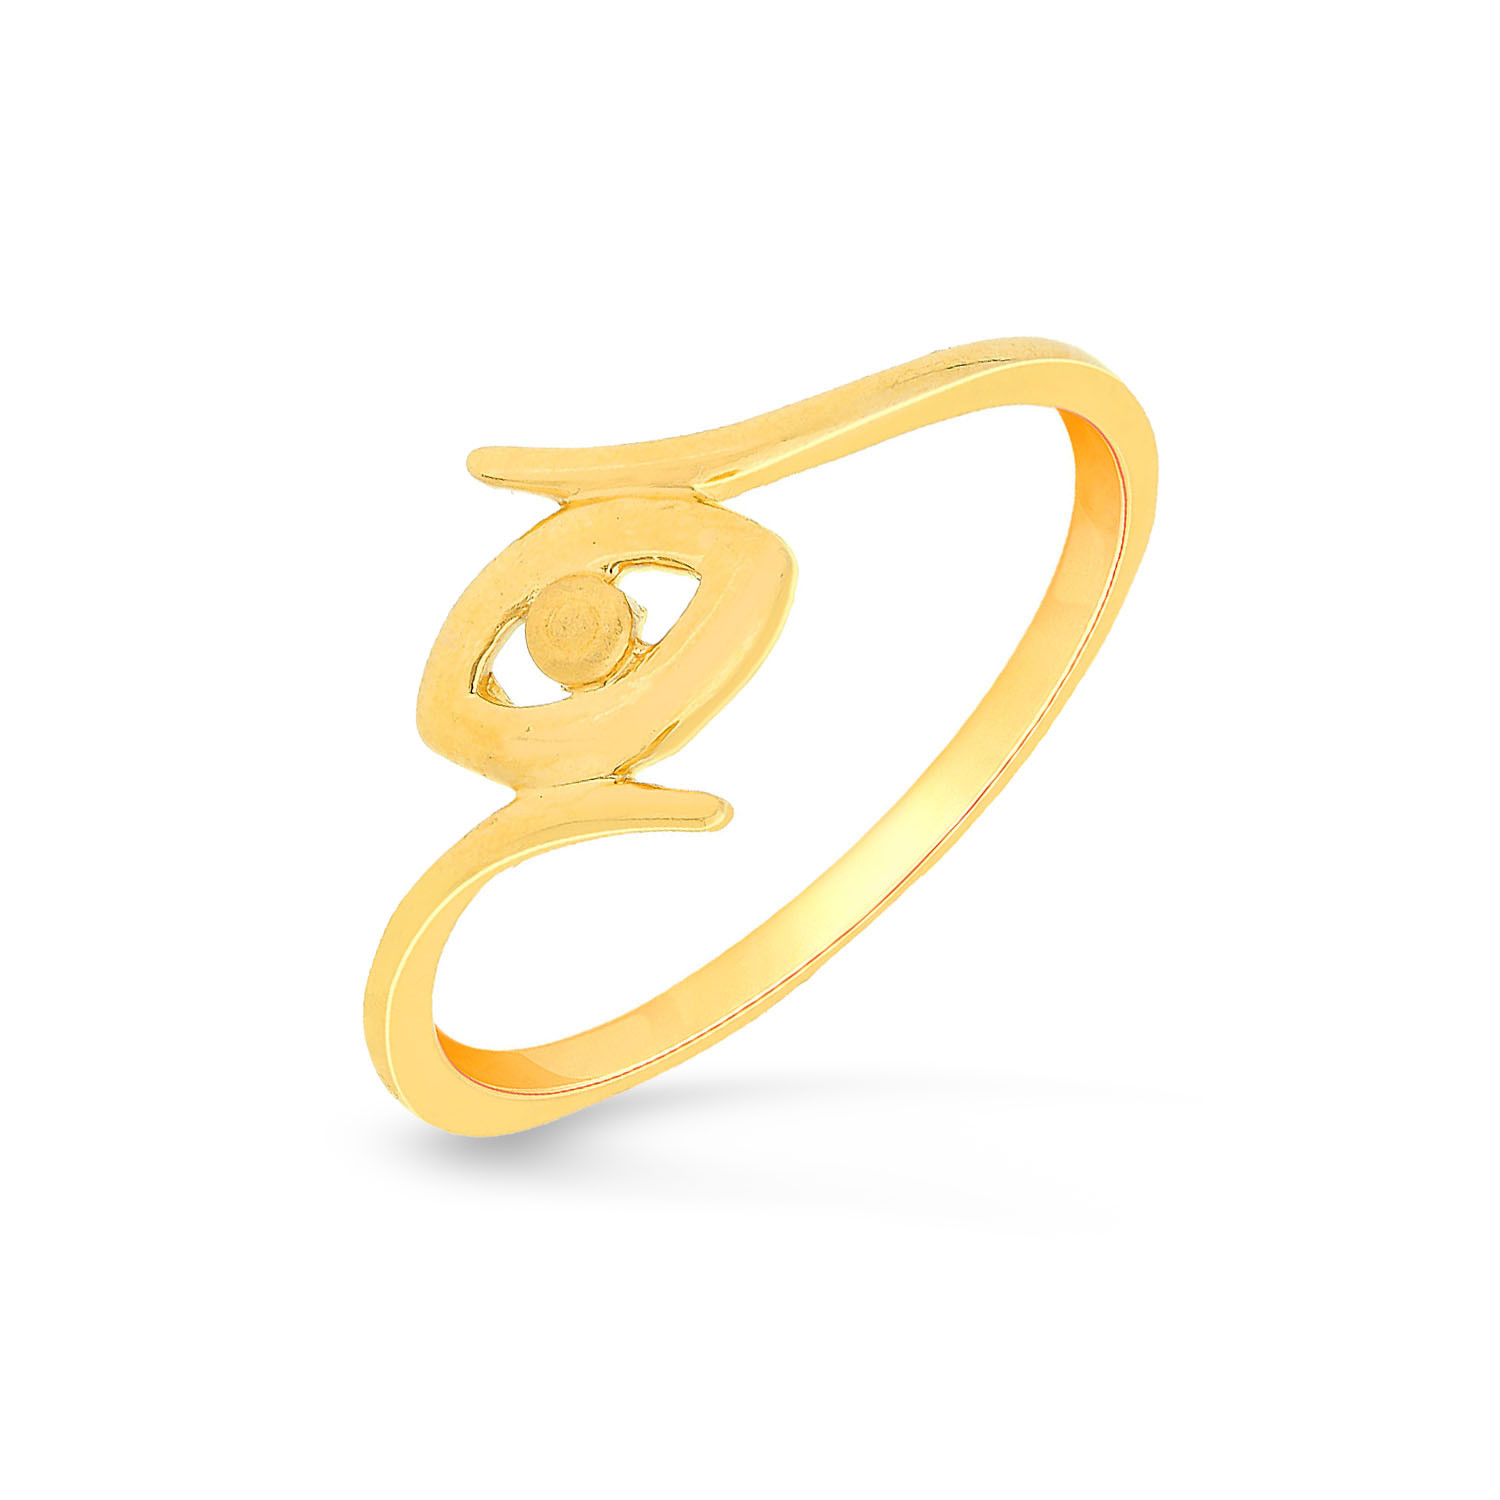 Malabar 22 KT Gold Studded Casual Ring FRGEDZRURGW731